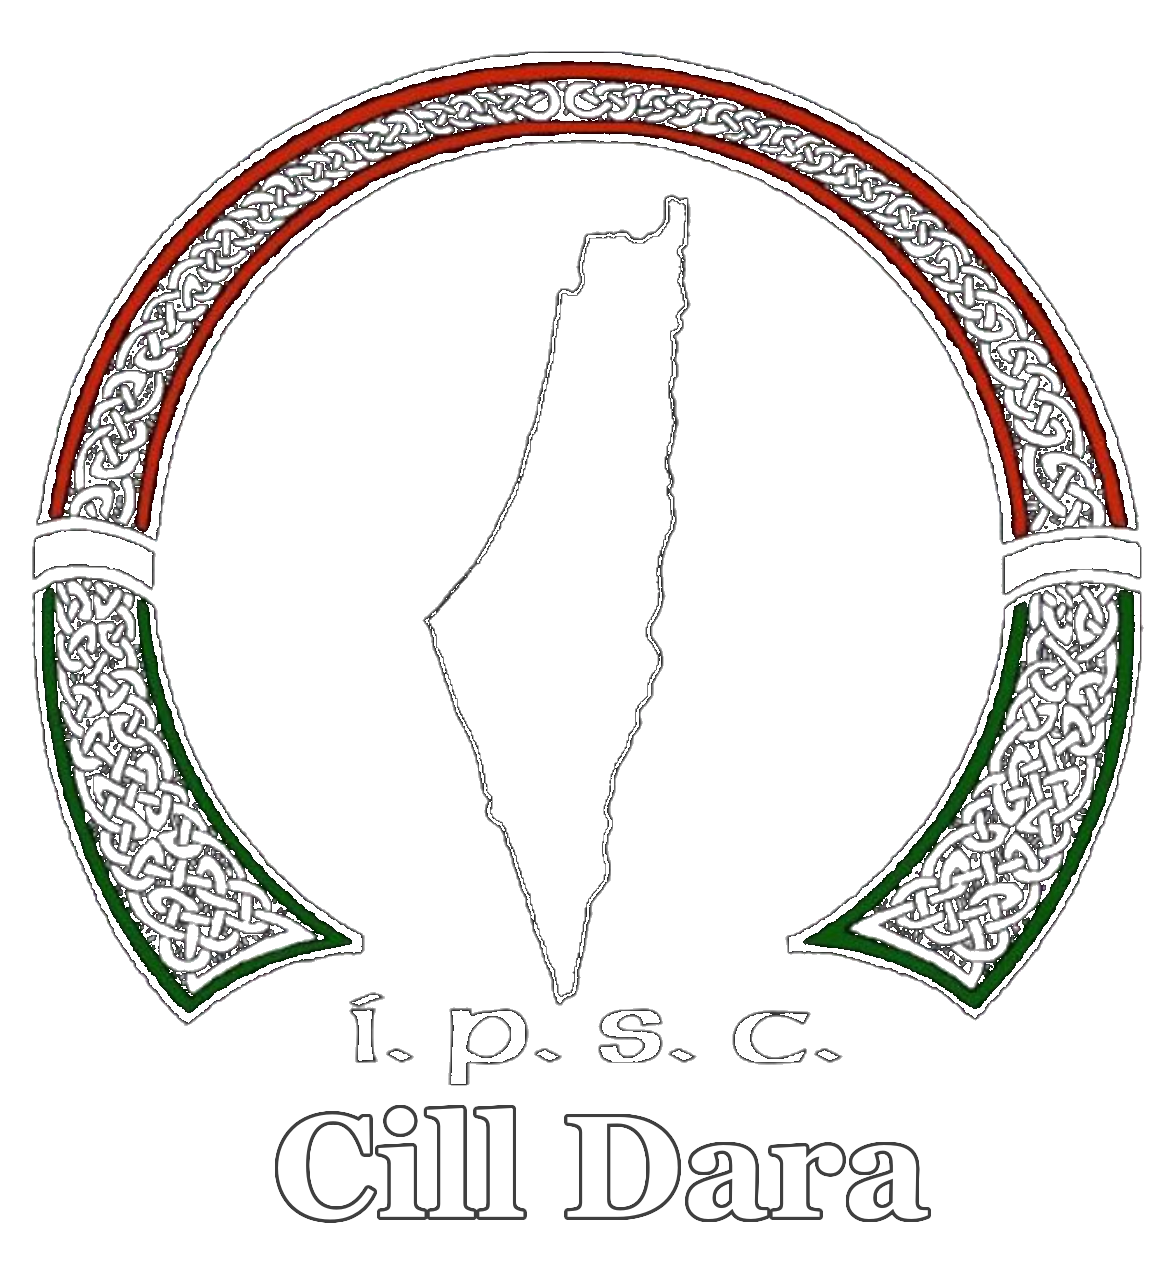 Irish Palestine Solidarity Campaign Cill Dara logo